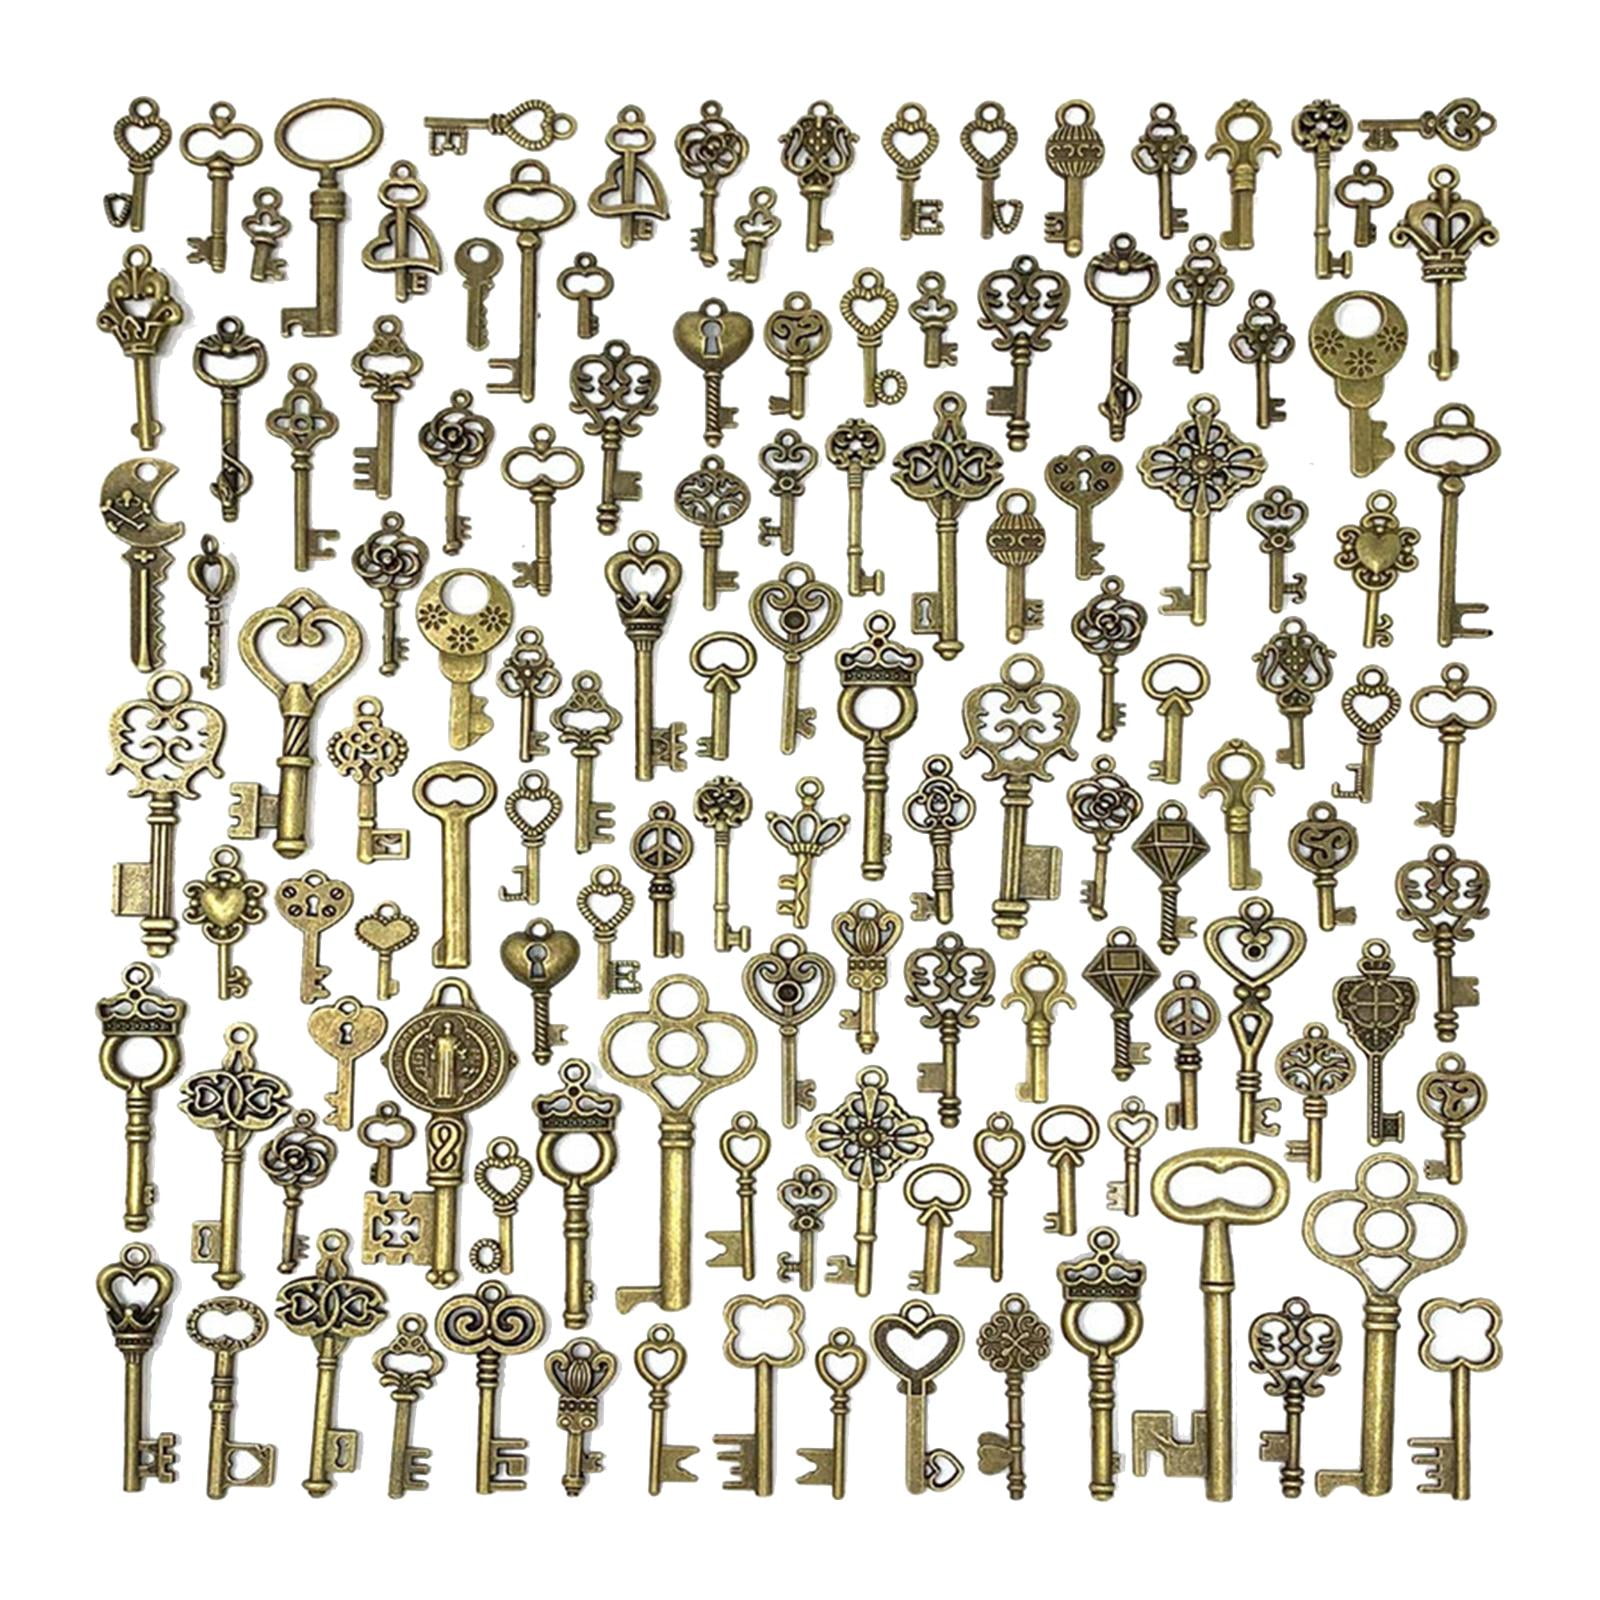 48Pcs 6 Styles Fruit Keychain Charms Key Chain Making Kits Acrylic